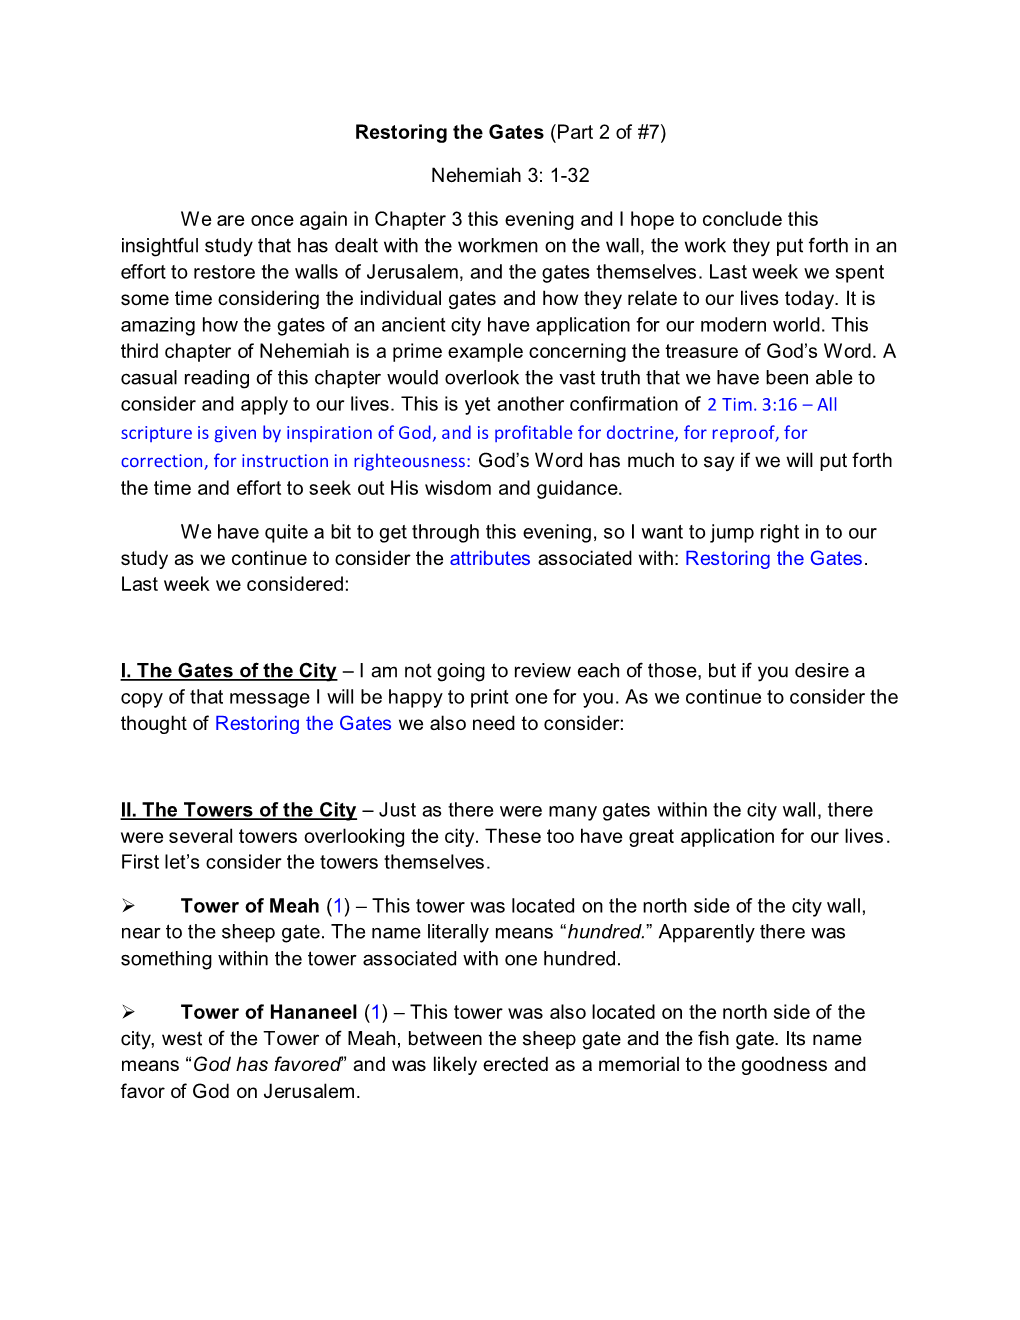 Restoring the Gates (Part 2 of #7) Nehemiah 3